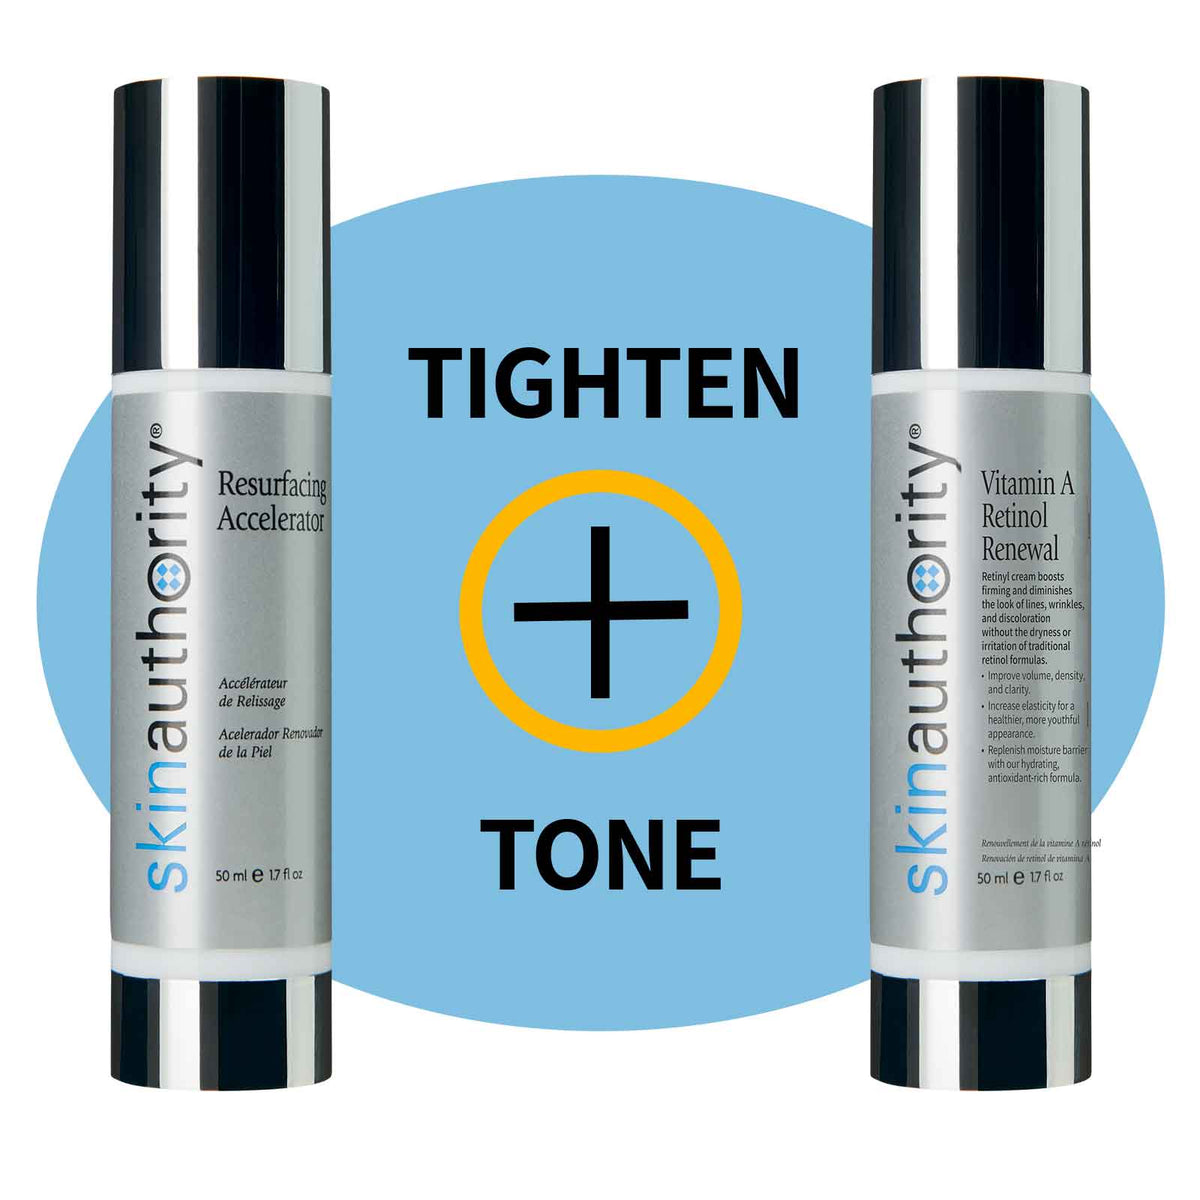 Tighten Skin Tone with Resurfacing Accelerator and Vitamin A Retinol Renewal